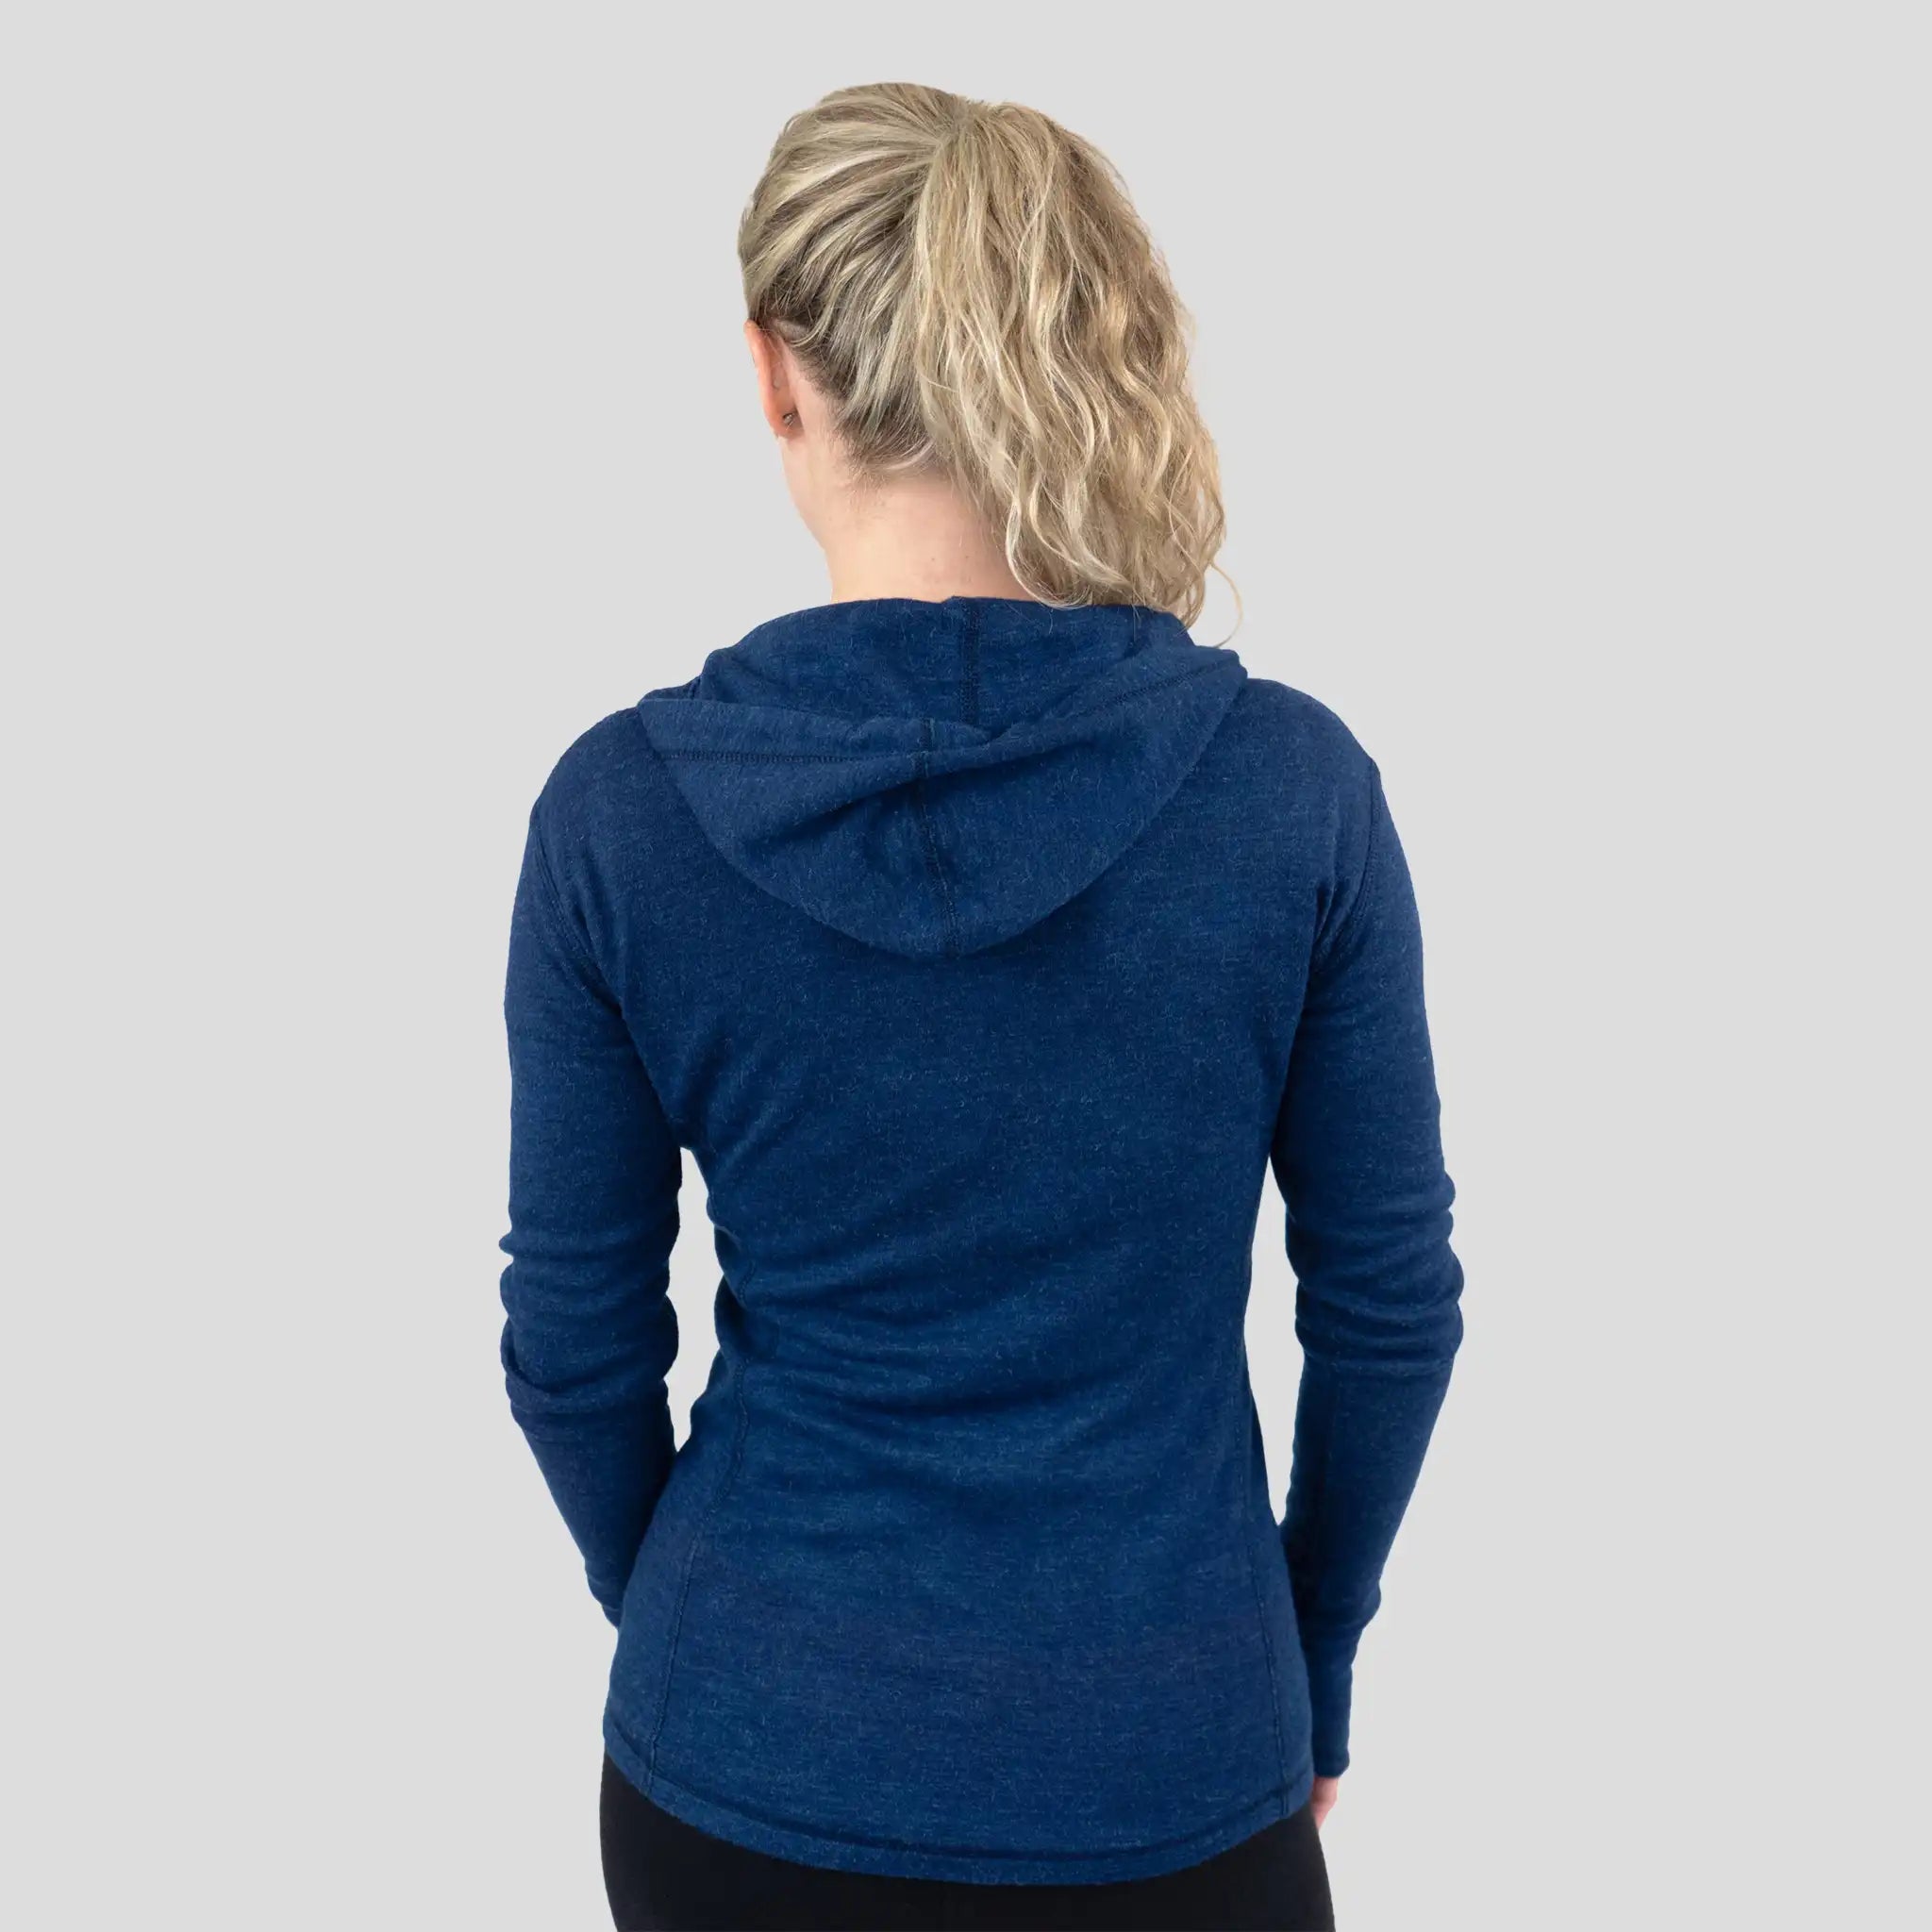 women warm alpaca wool baselayer hoodie lightweight color natural blue